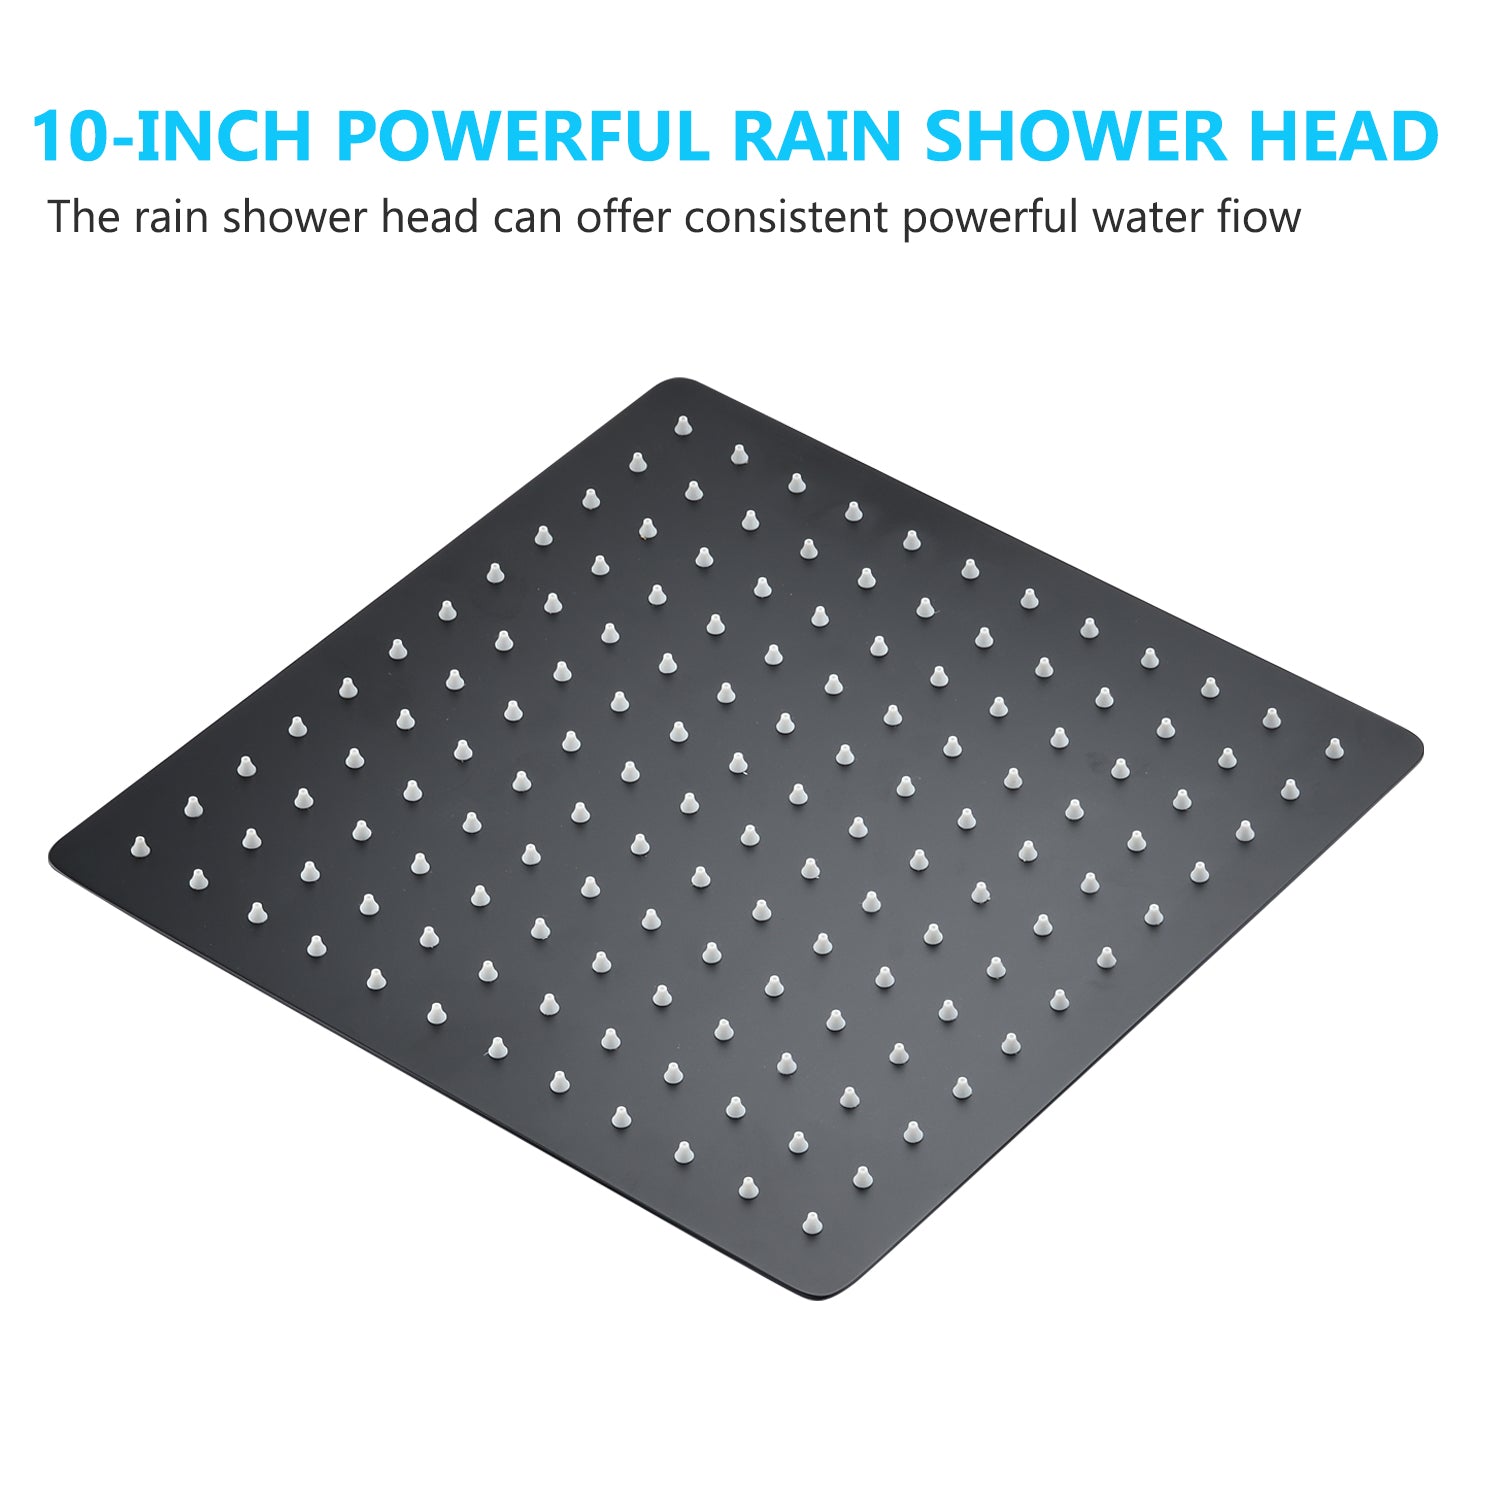 10 in. rain shower head system